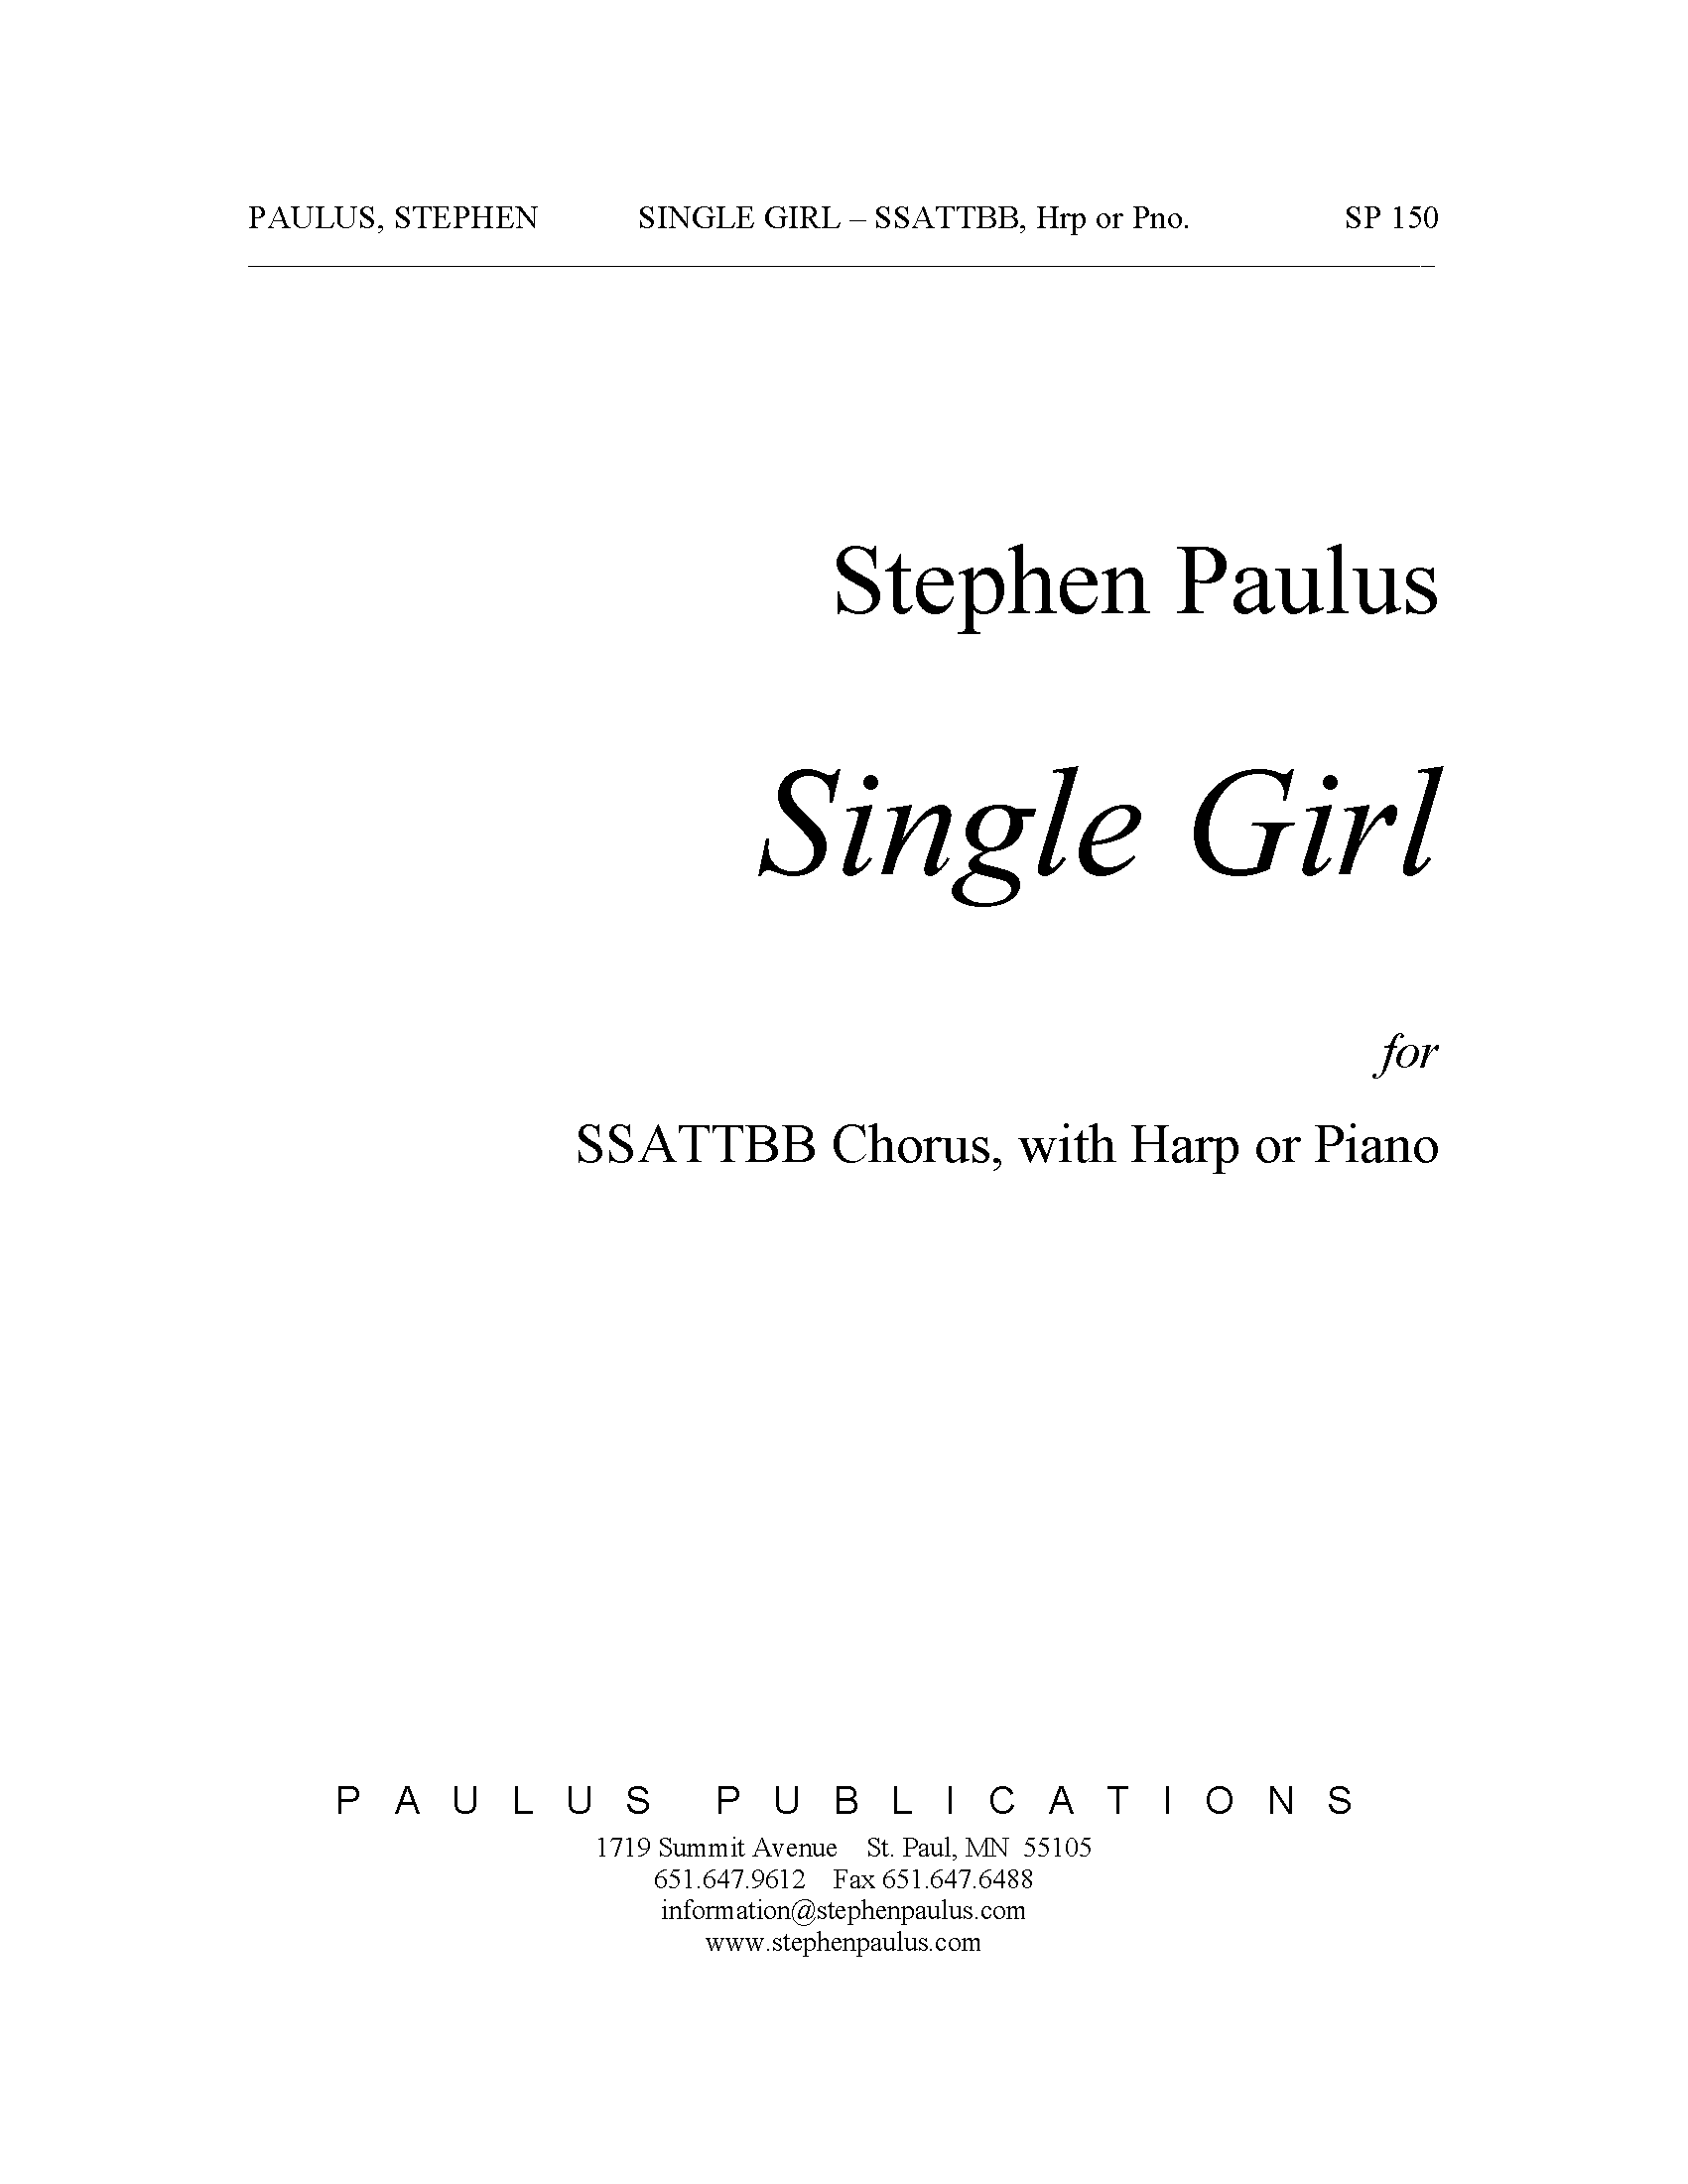 Single Girl for SSATTBB Chorus & Harp (or Piano)